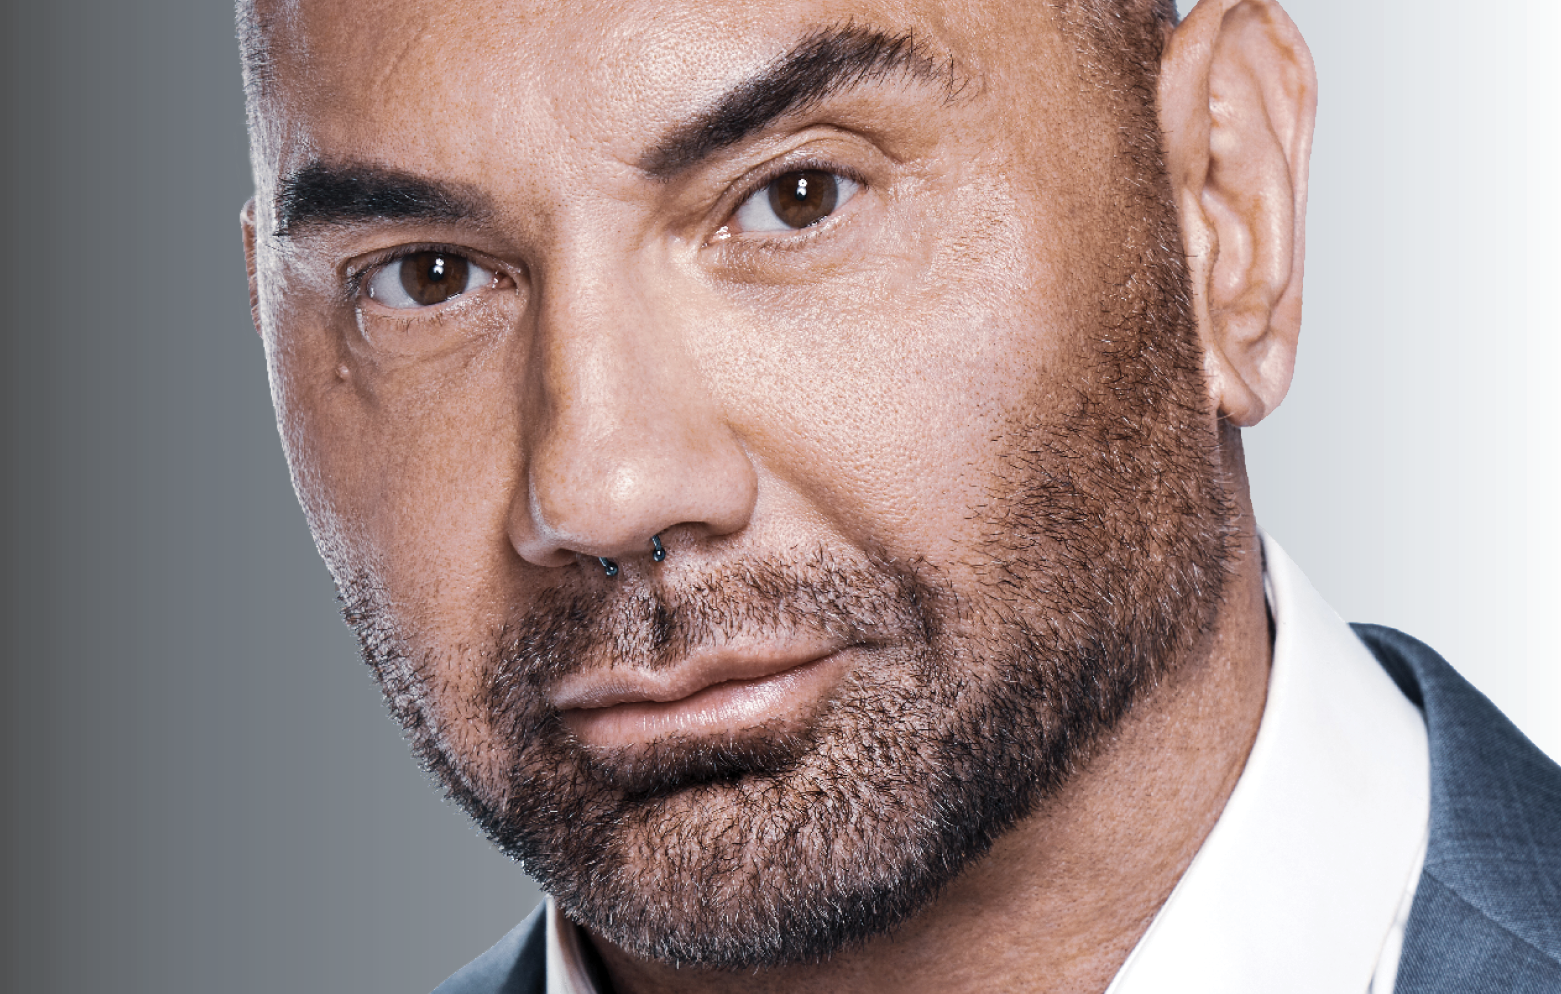 WWE's Dave 'Batista' Bautista will play new James Bond villain in